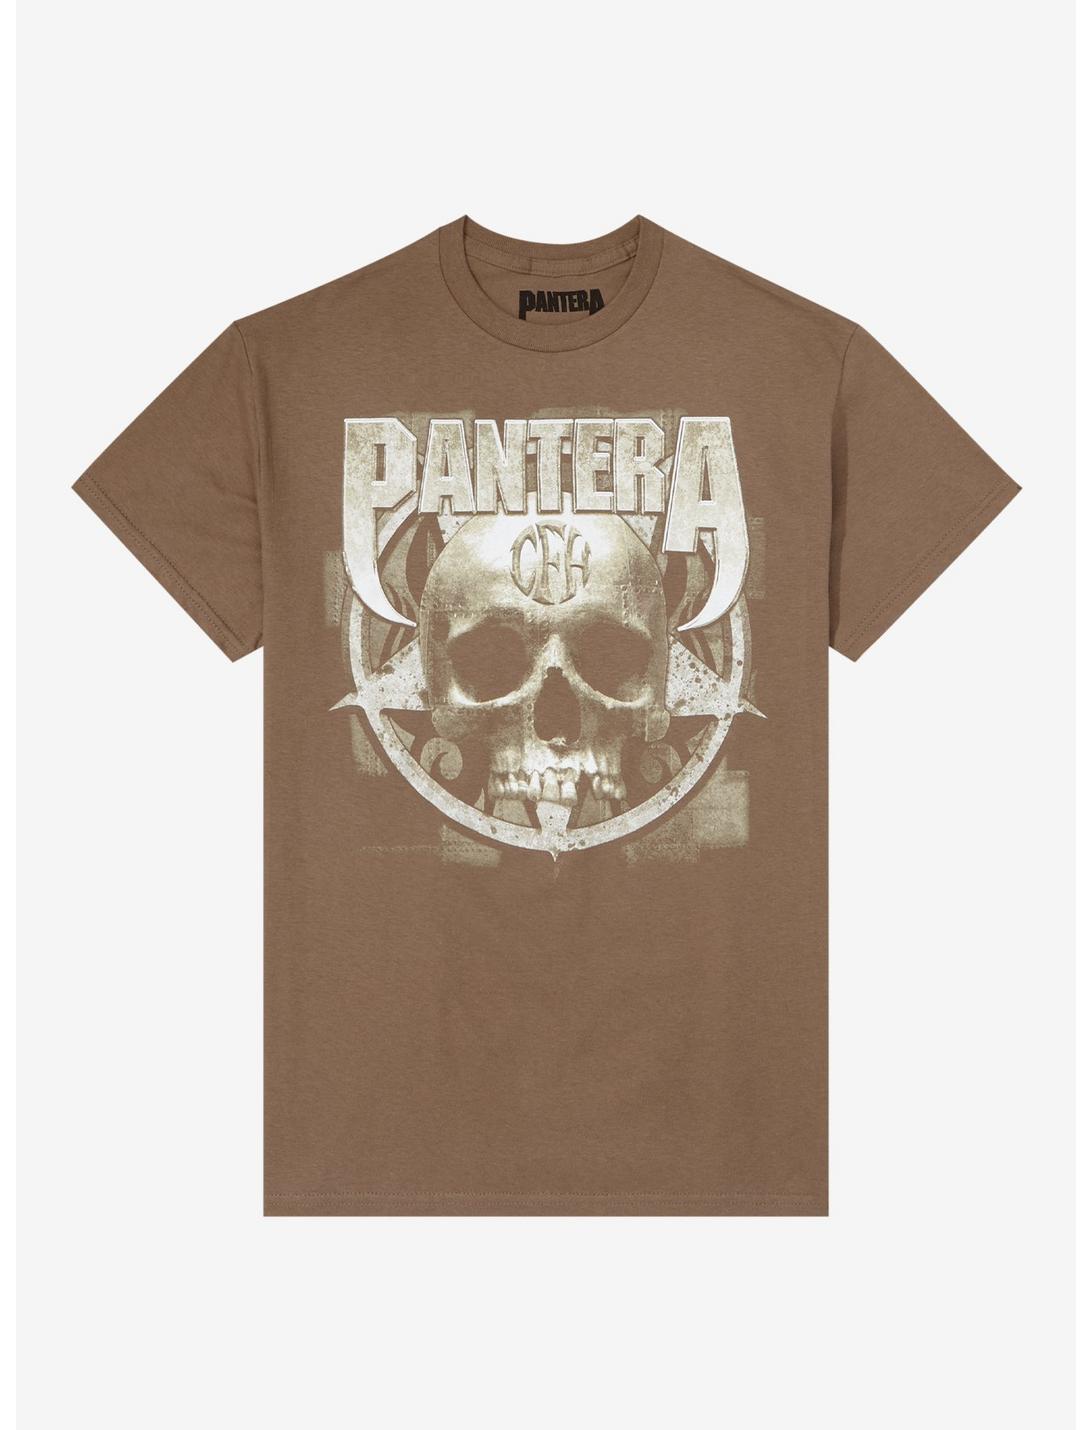 Pantera Cowboys From Hell Girls T-Shirt | Hot Topic